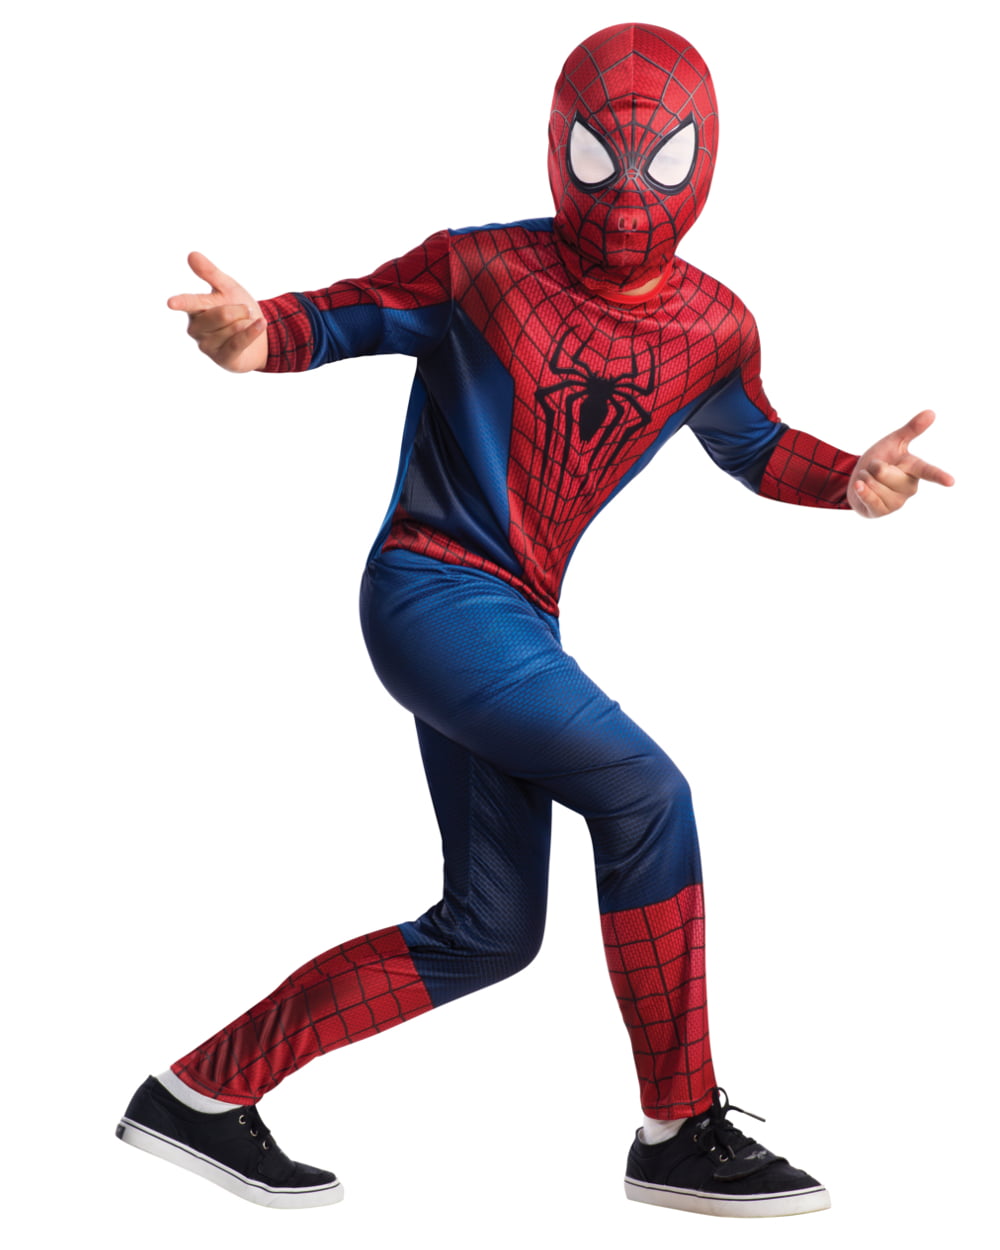 Bermad fyrværkeri London Rubies Costume Co Childs Spiderman The Amazing Spider-Man 2 Movie Costume  Boys Large 12-14 - Walmart.com